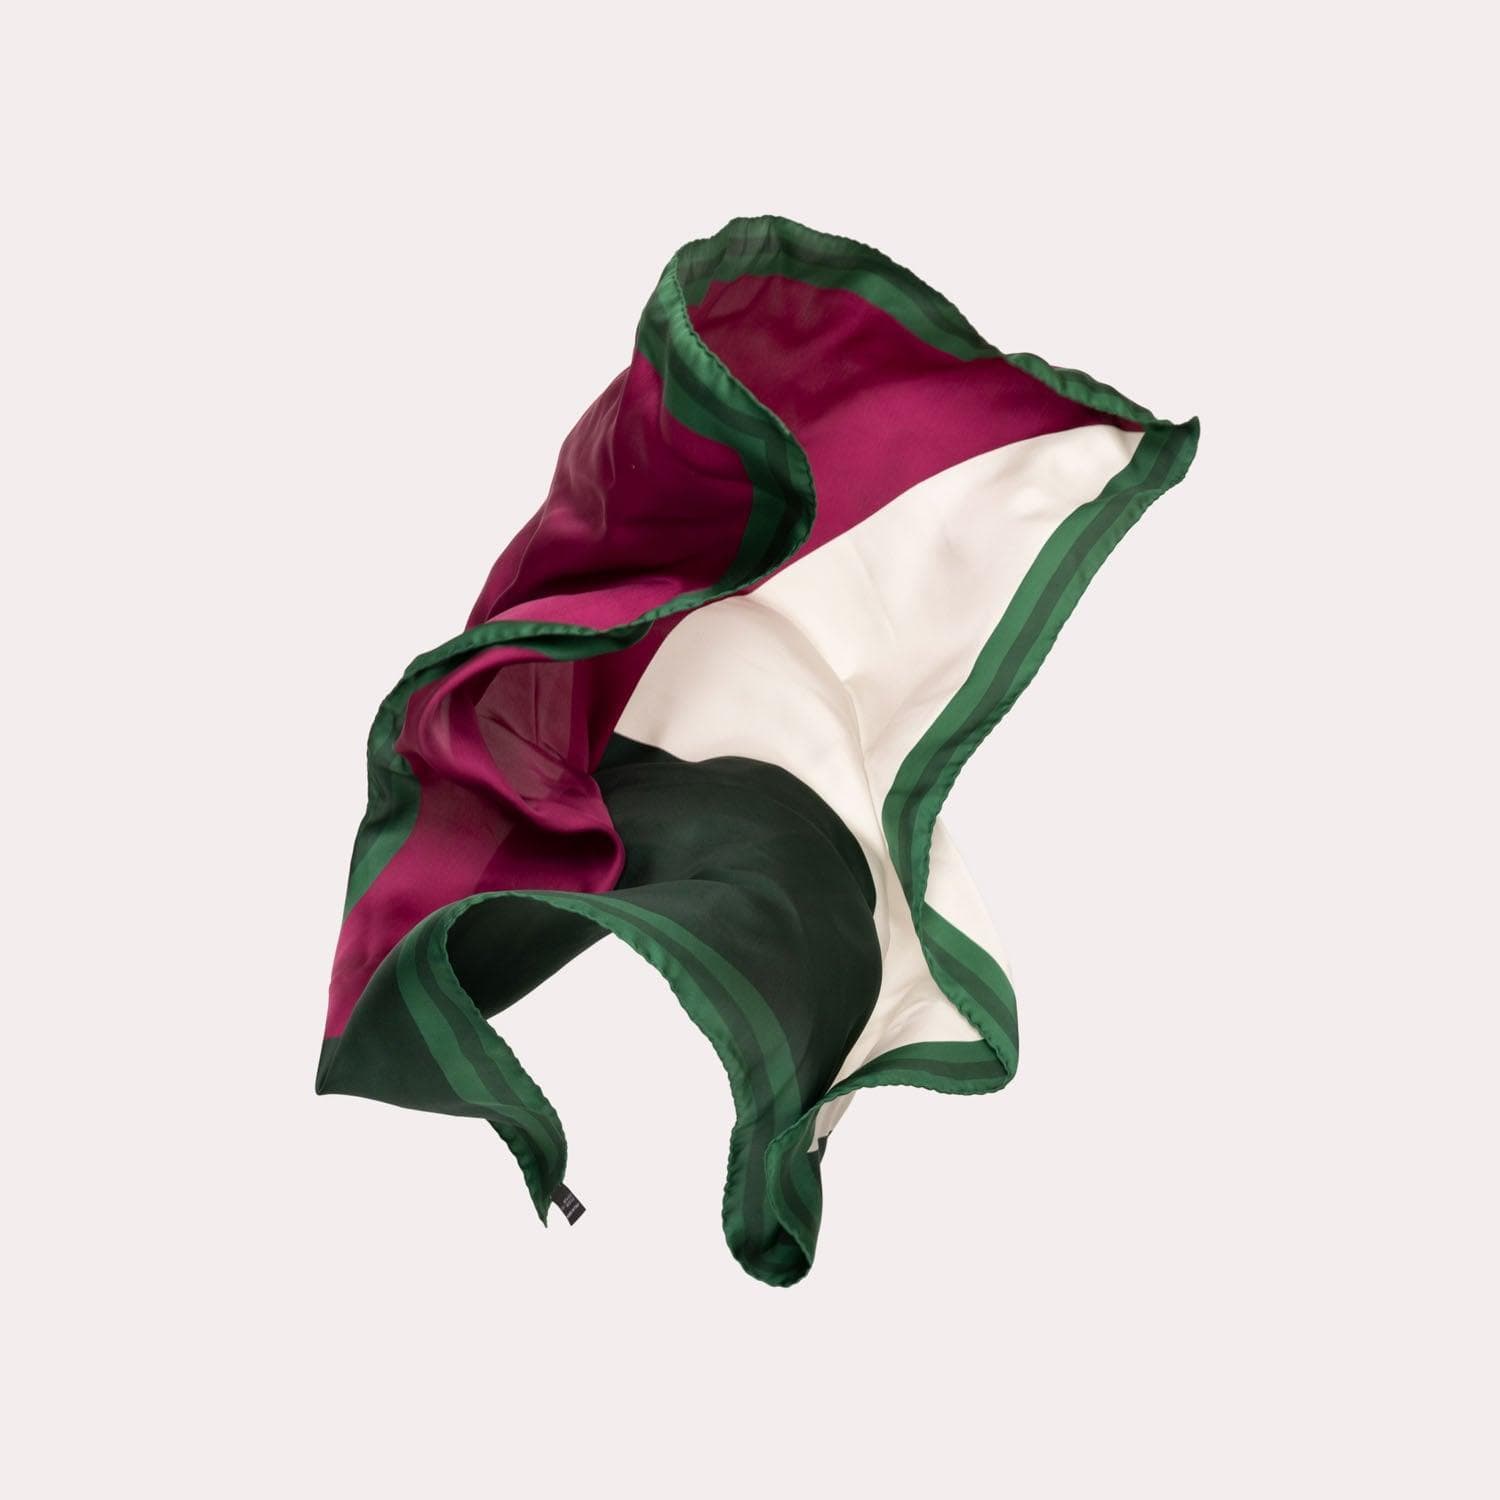 100% Silk scarf. Watermelon scarf by Seymoure Gloves.